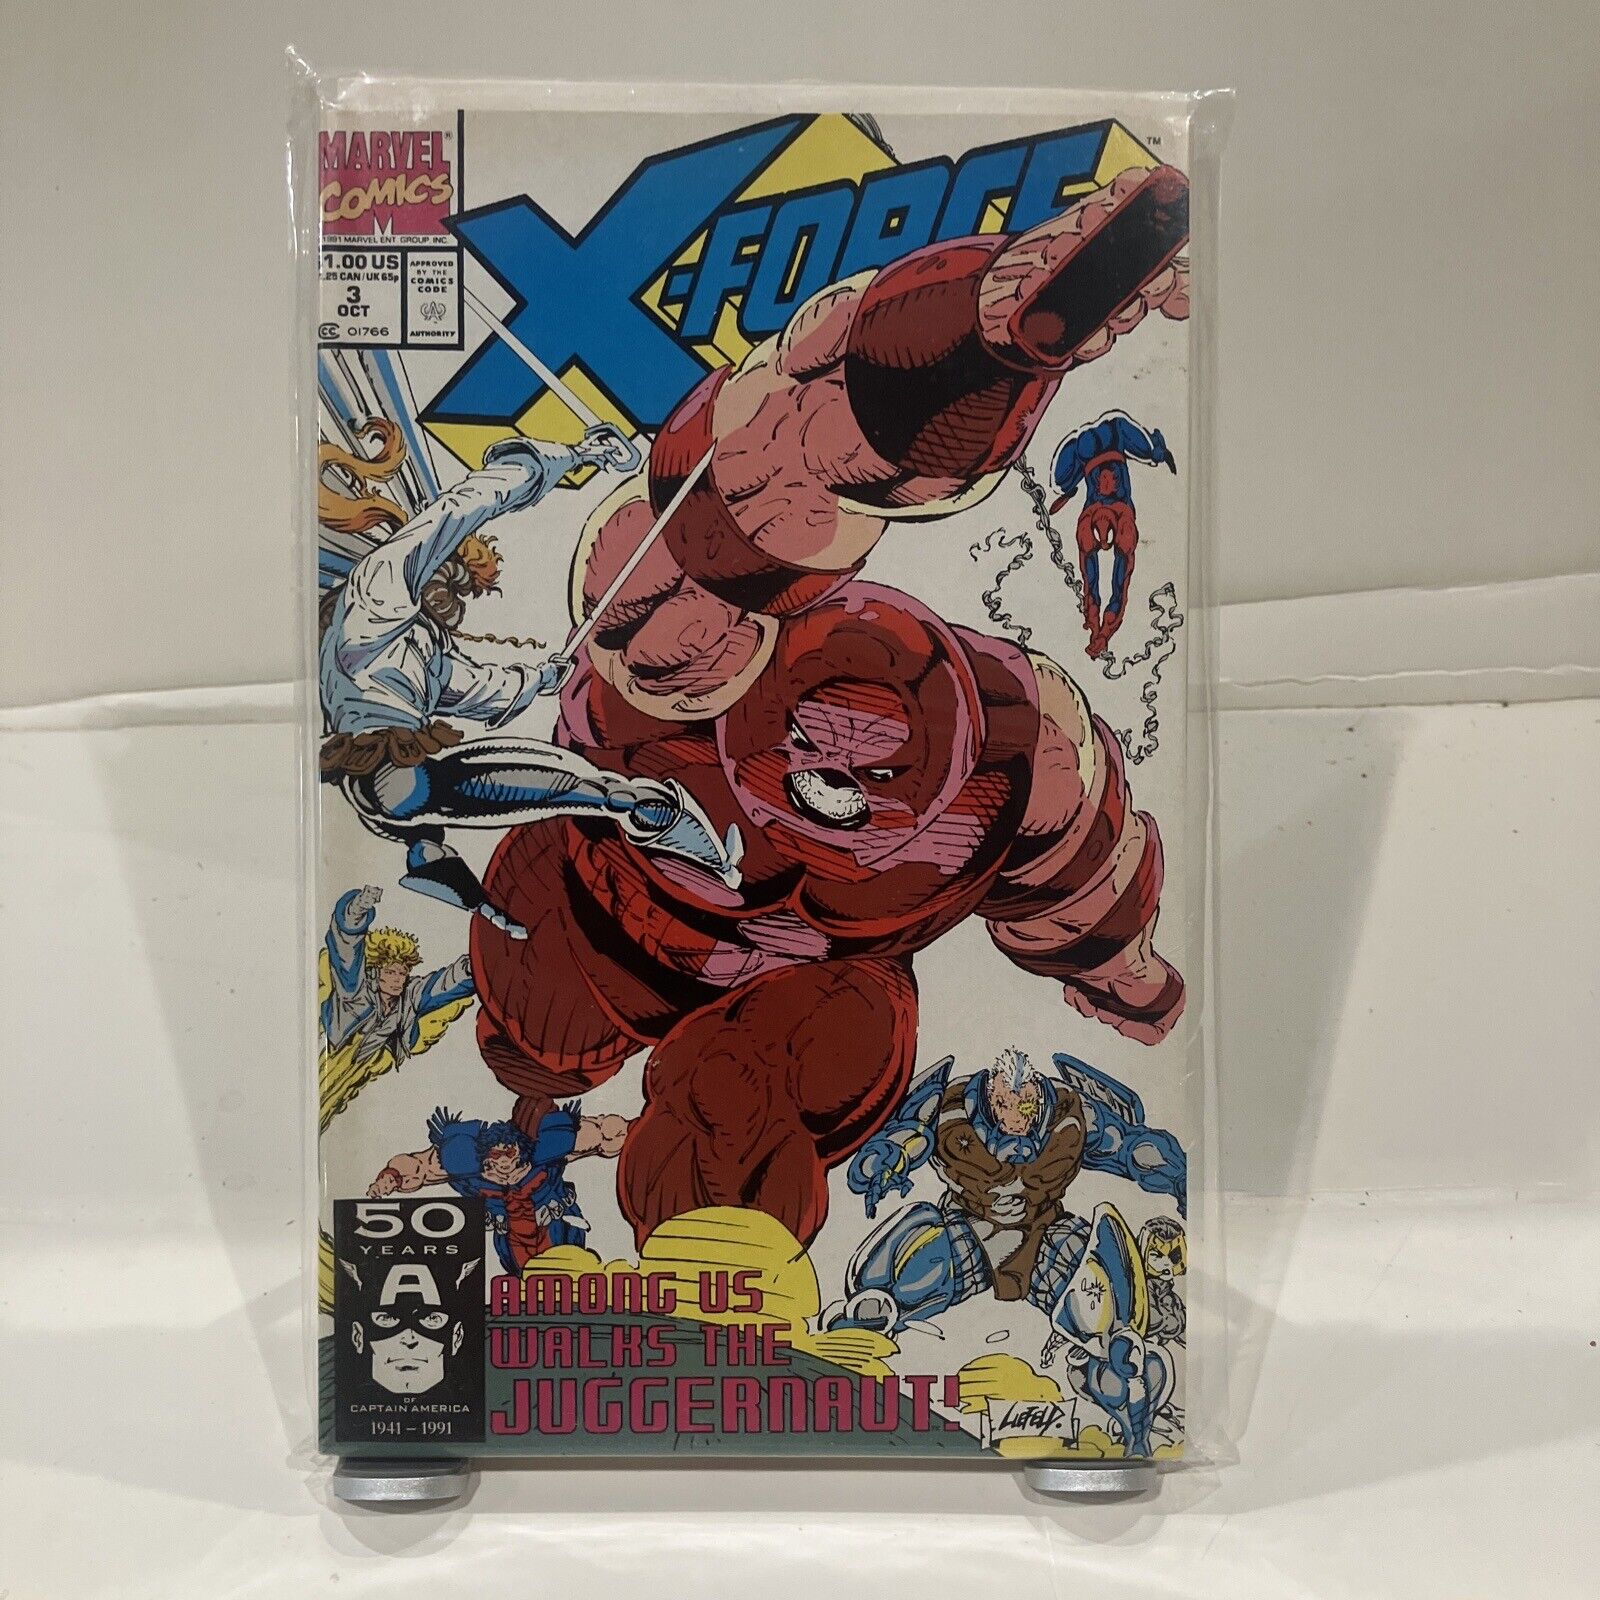 X-Force #3 (Marvel, October 1991)